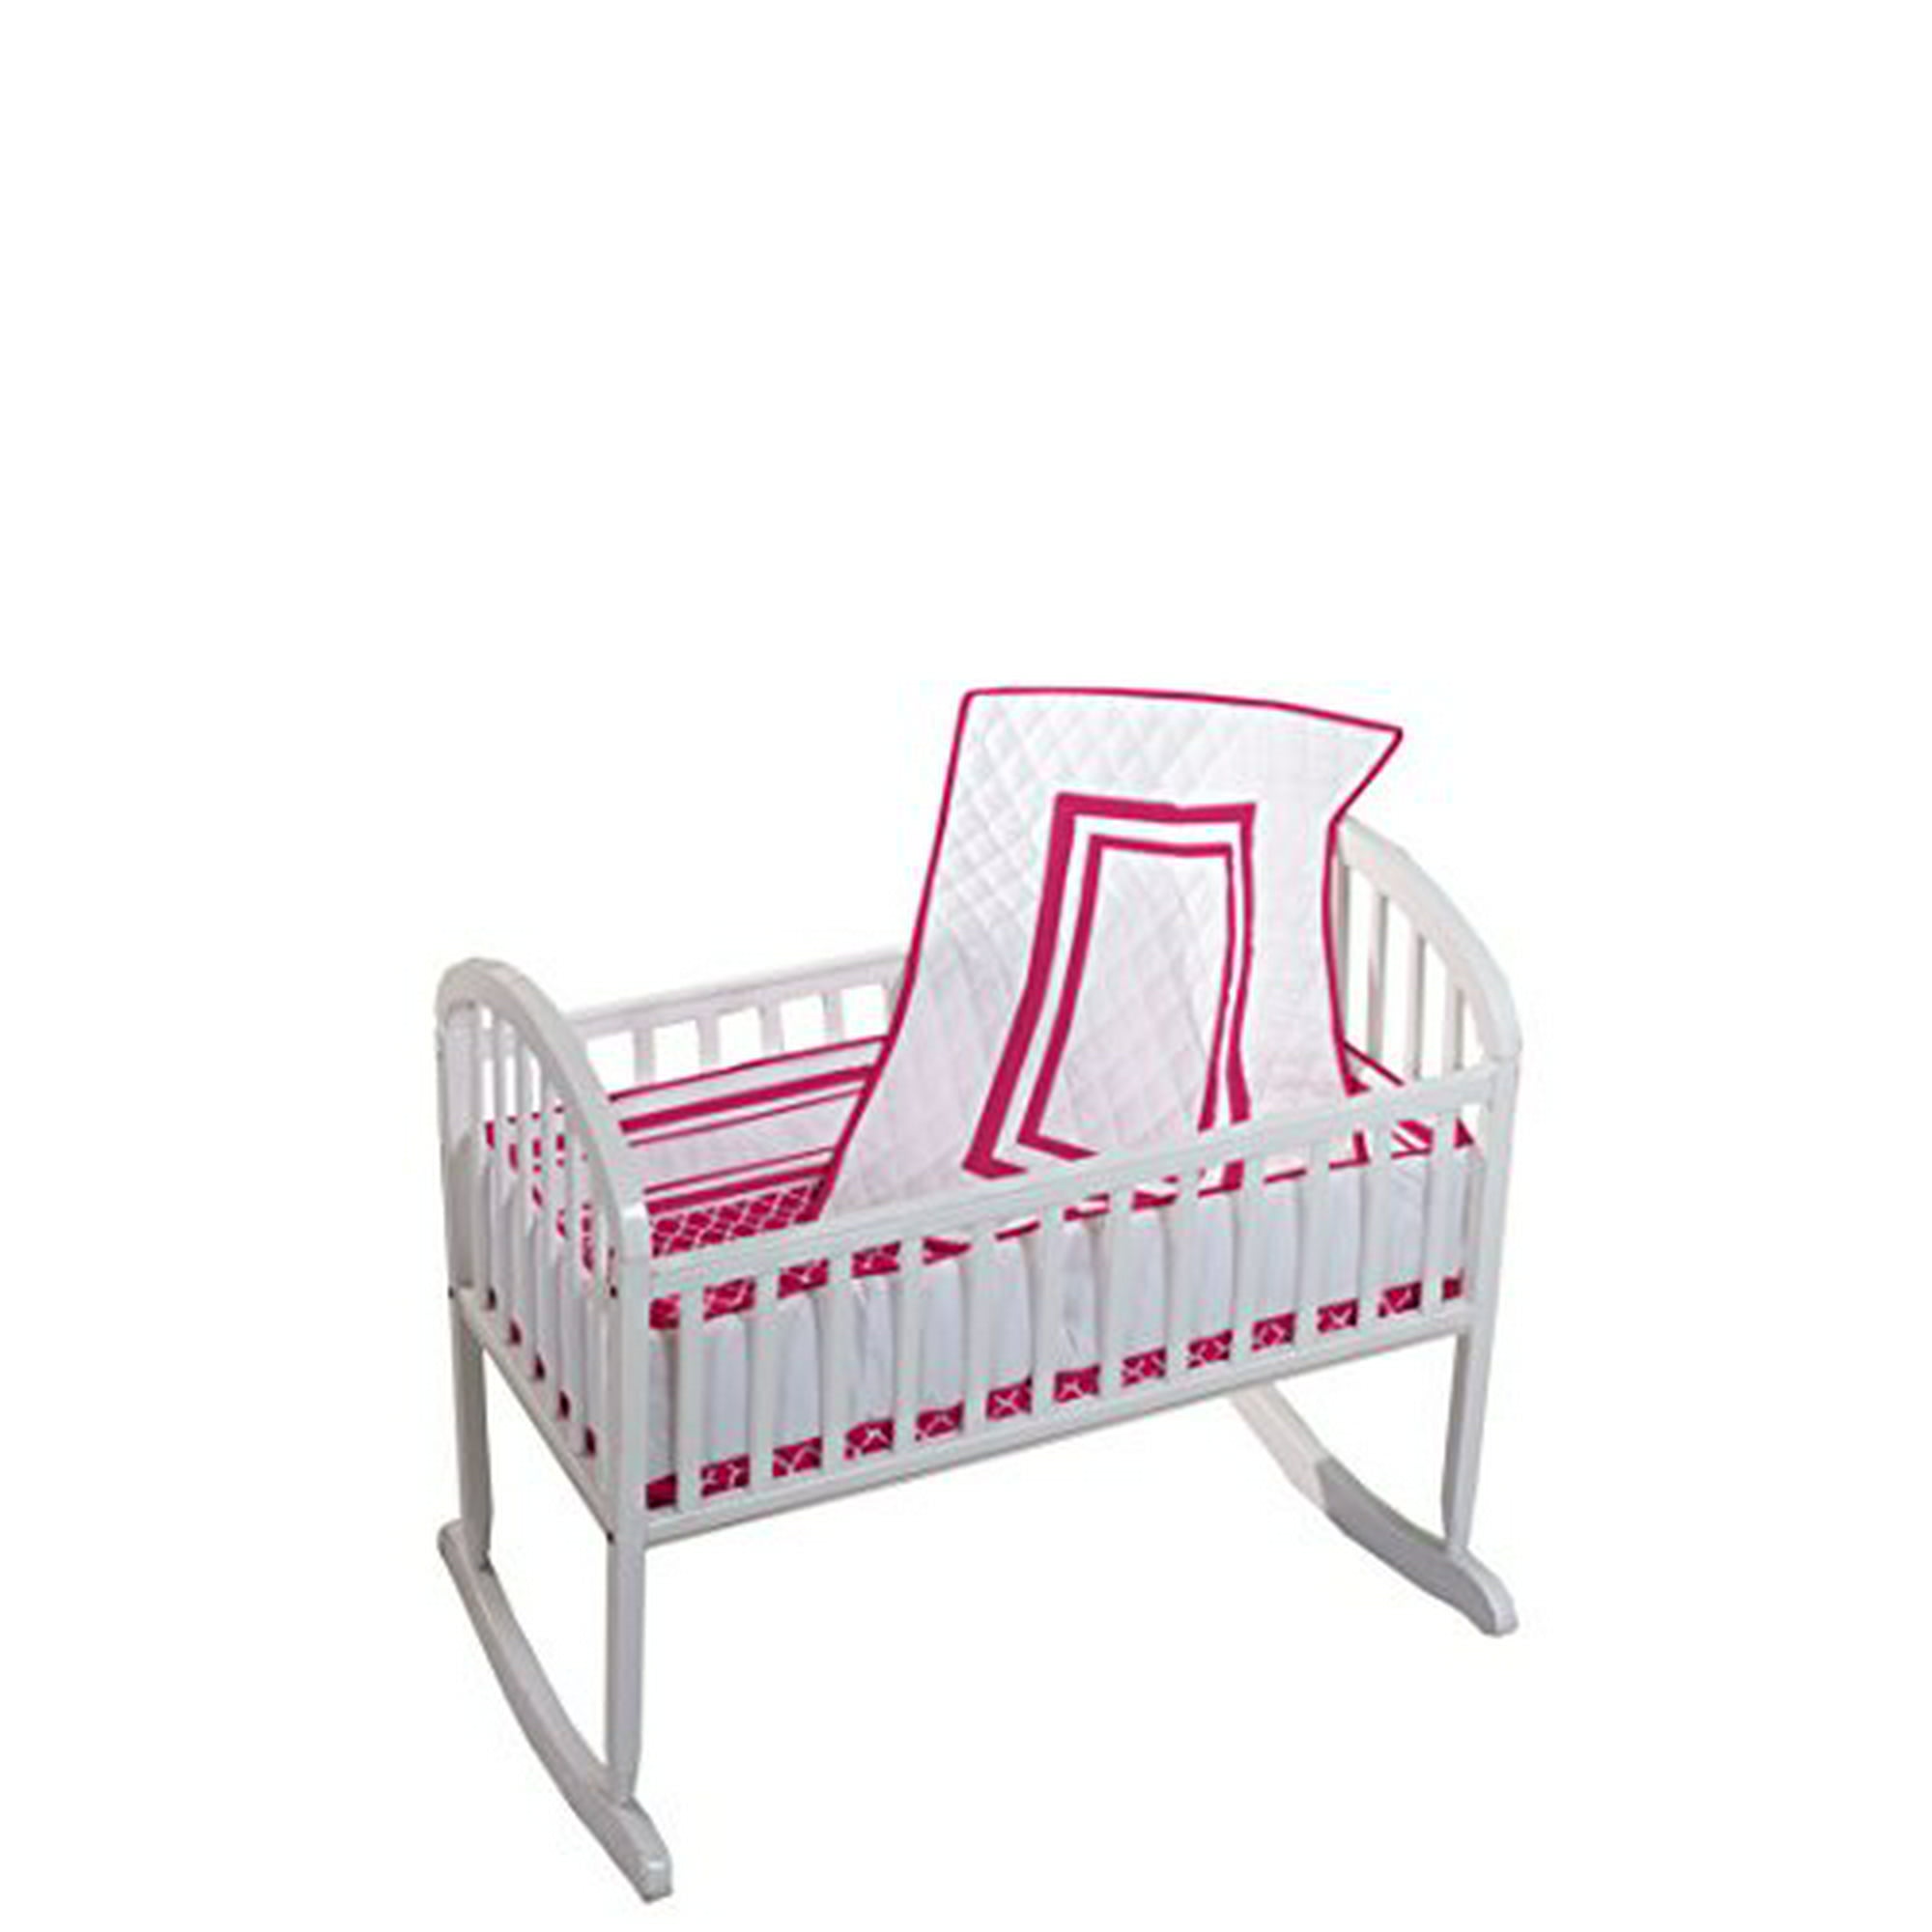 Baby Doll Bedding Gingham with Bear Applique Mini Crib/Port-a-Crib Bedding Set,